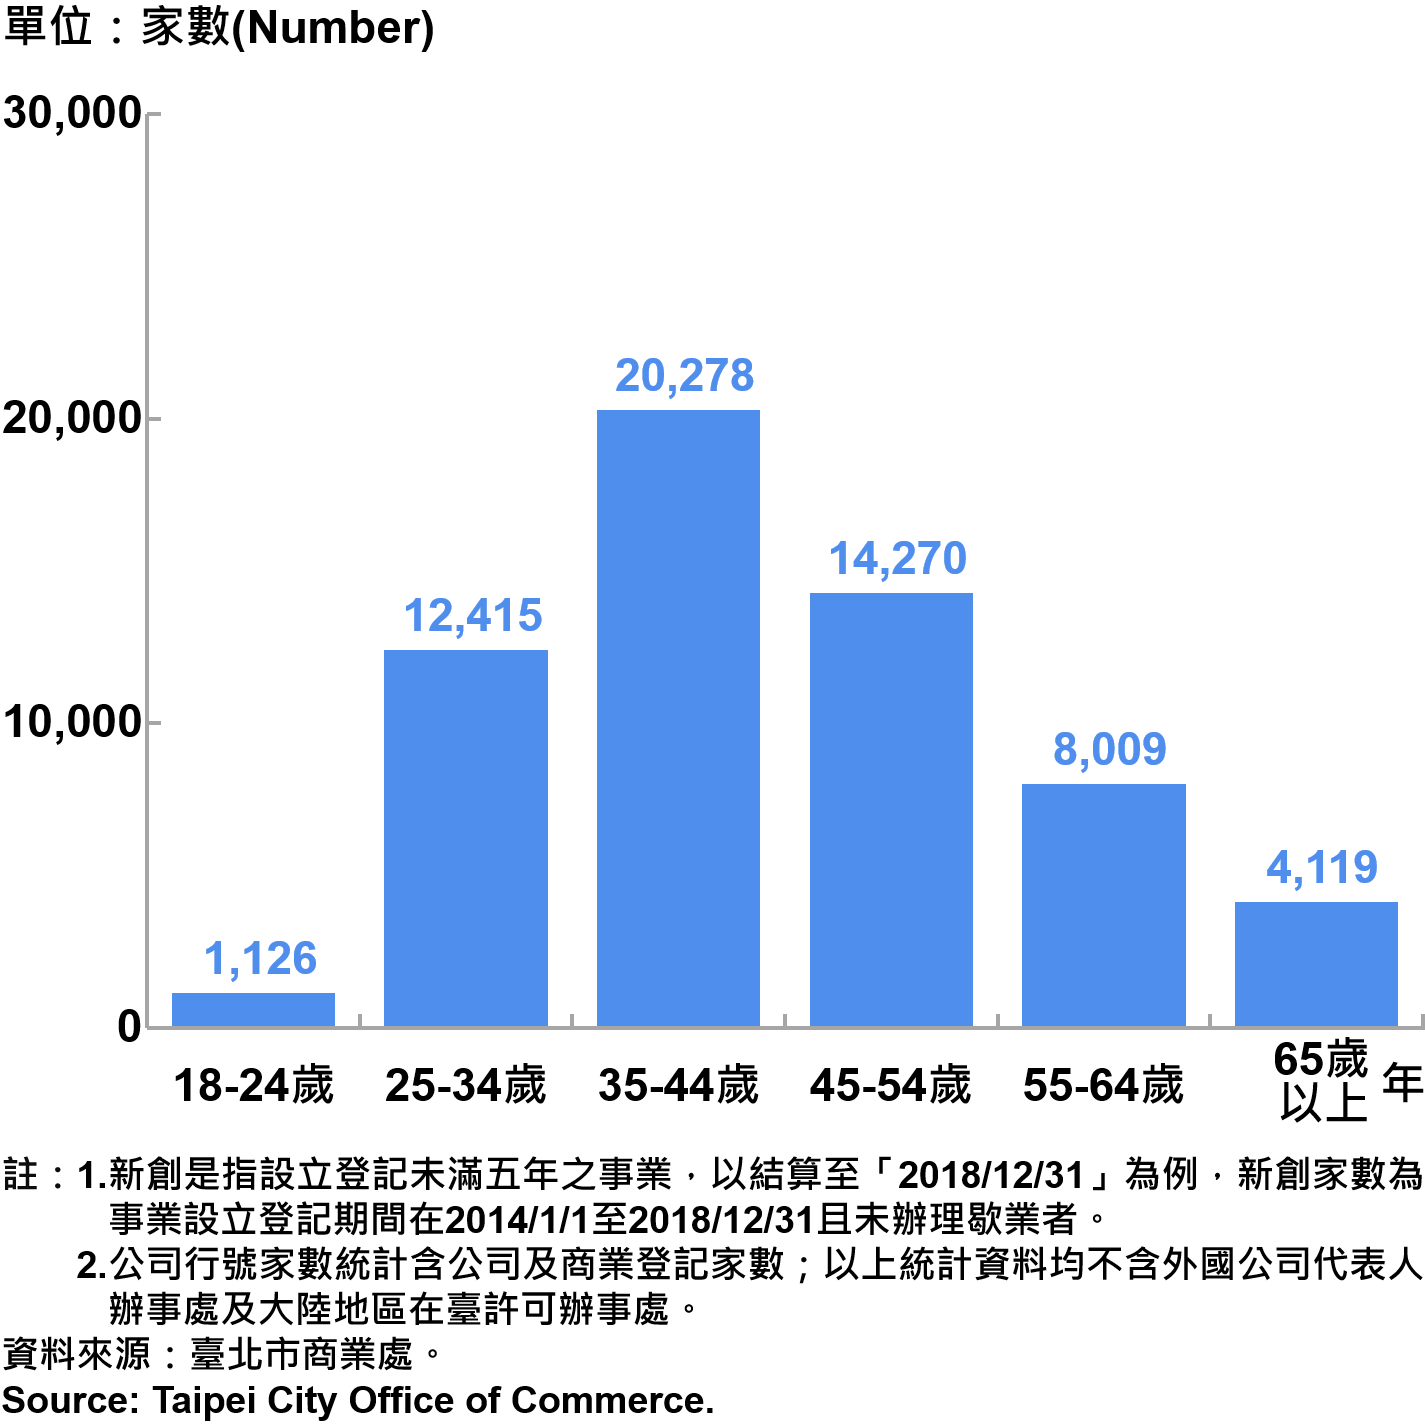 臺北市新創公司行號負責人年齡分布情形-現存家數—2020 Responsible Person of Newly Registered Companies In Taipei City by Age - Number of Current —2020